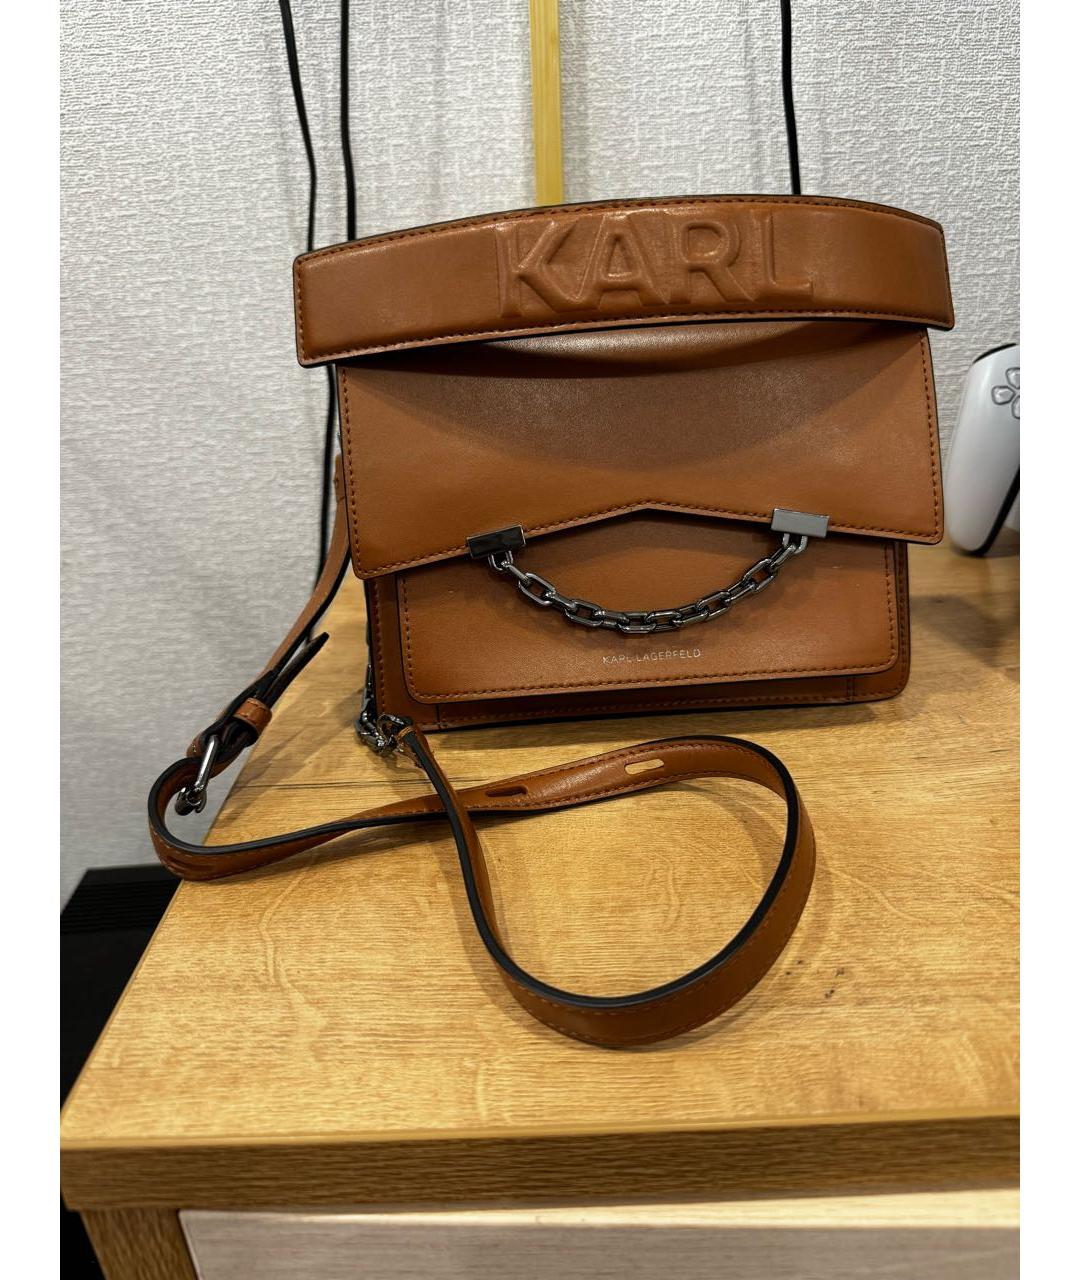 KARL LAGERFELD Коричневая кожаная сумка с короткими ручками, фото 2